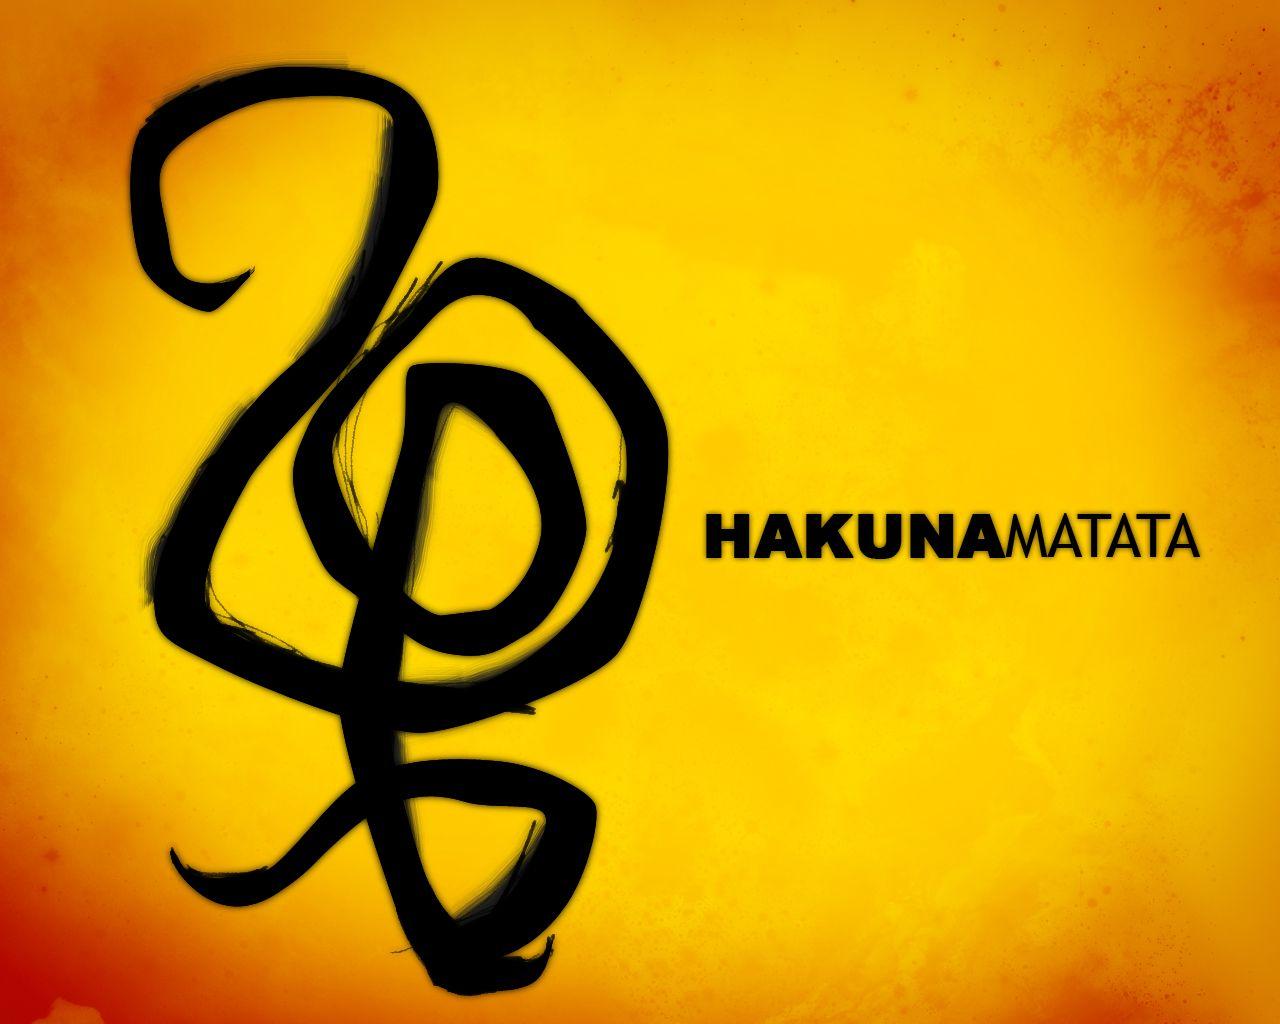 High Quality Hakuna Matata Wallpaper. Full HD Picture